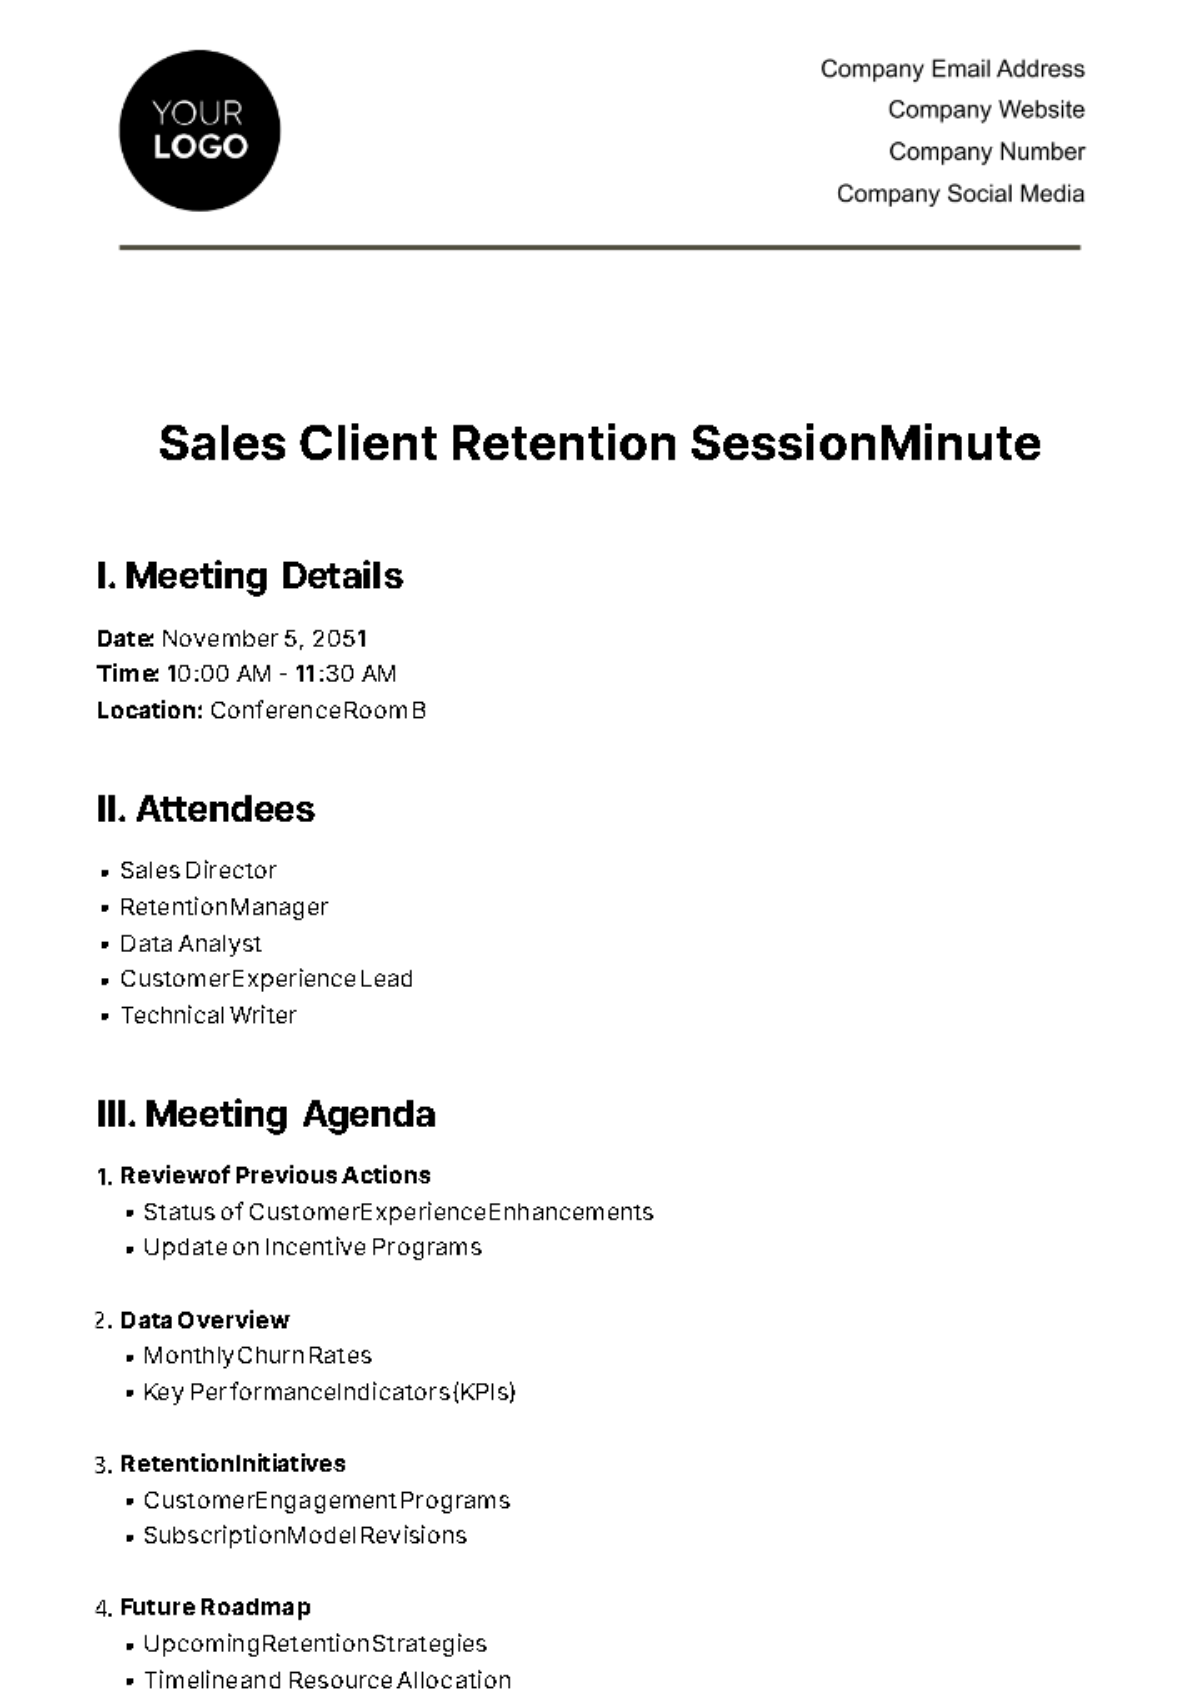 Sales Client Retention Session Minute Template